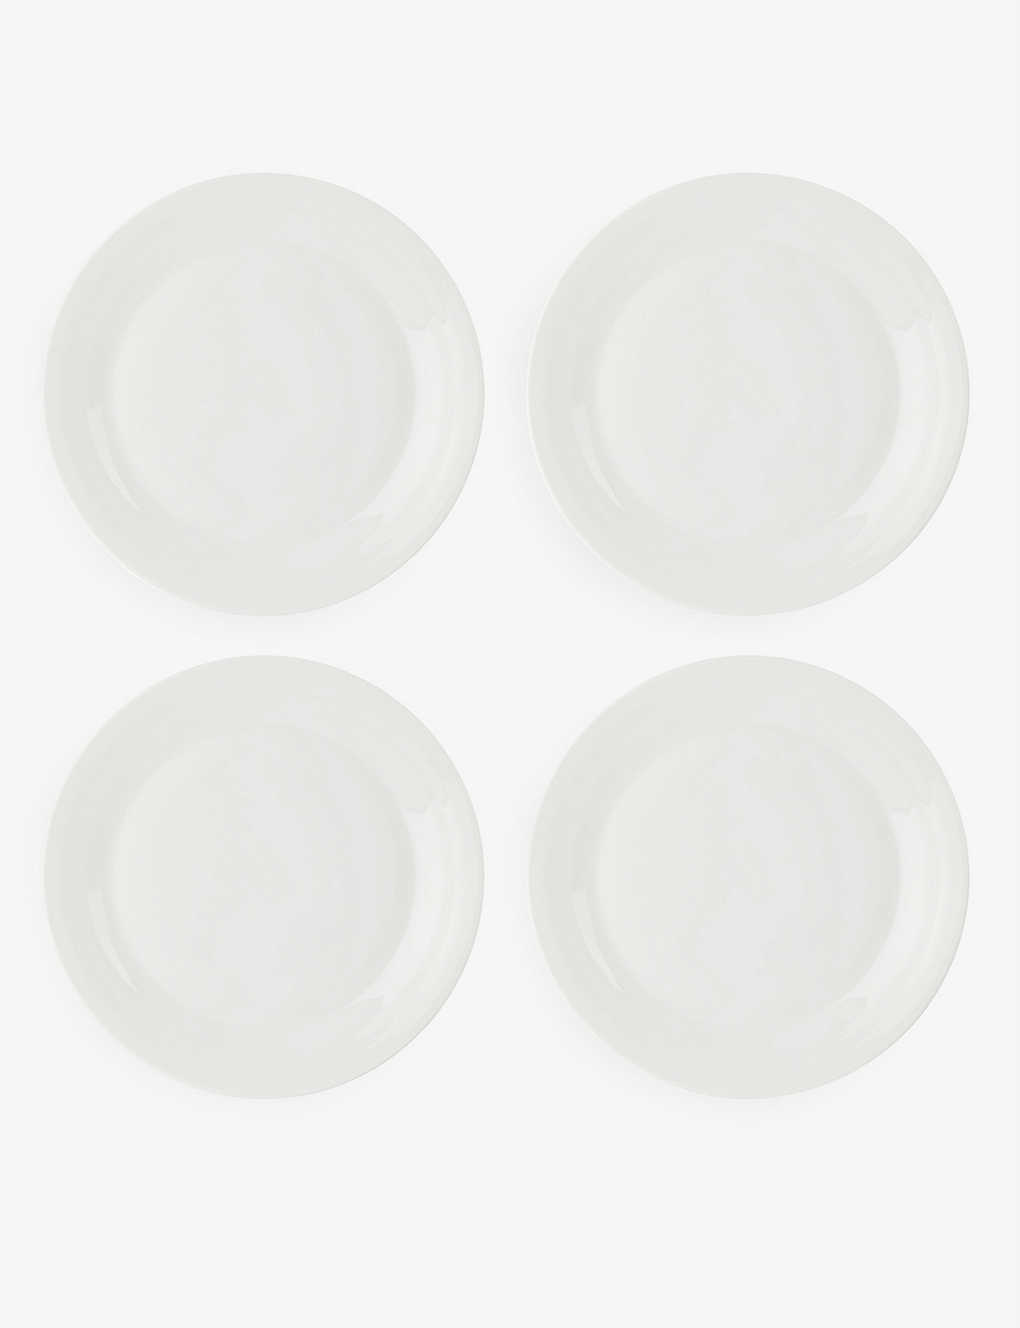 ROYAL DOULTON 1815 sA |[ZC v[g 4Zbg 1815 Pure porcelain plates set of four